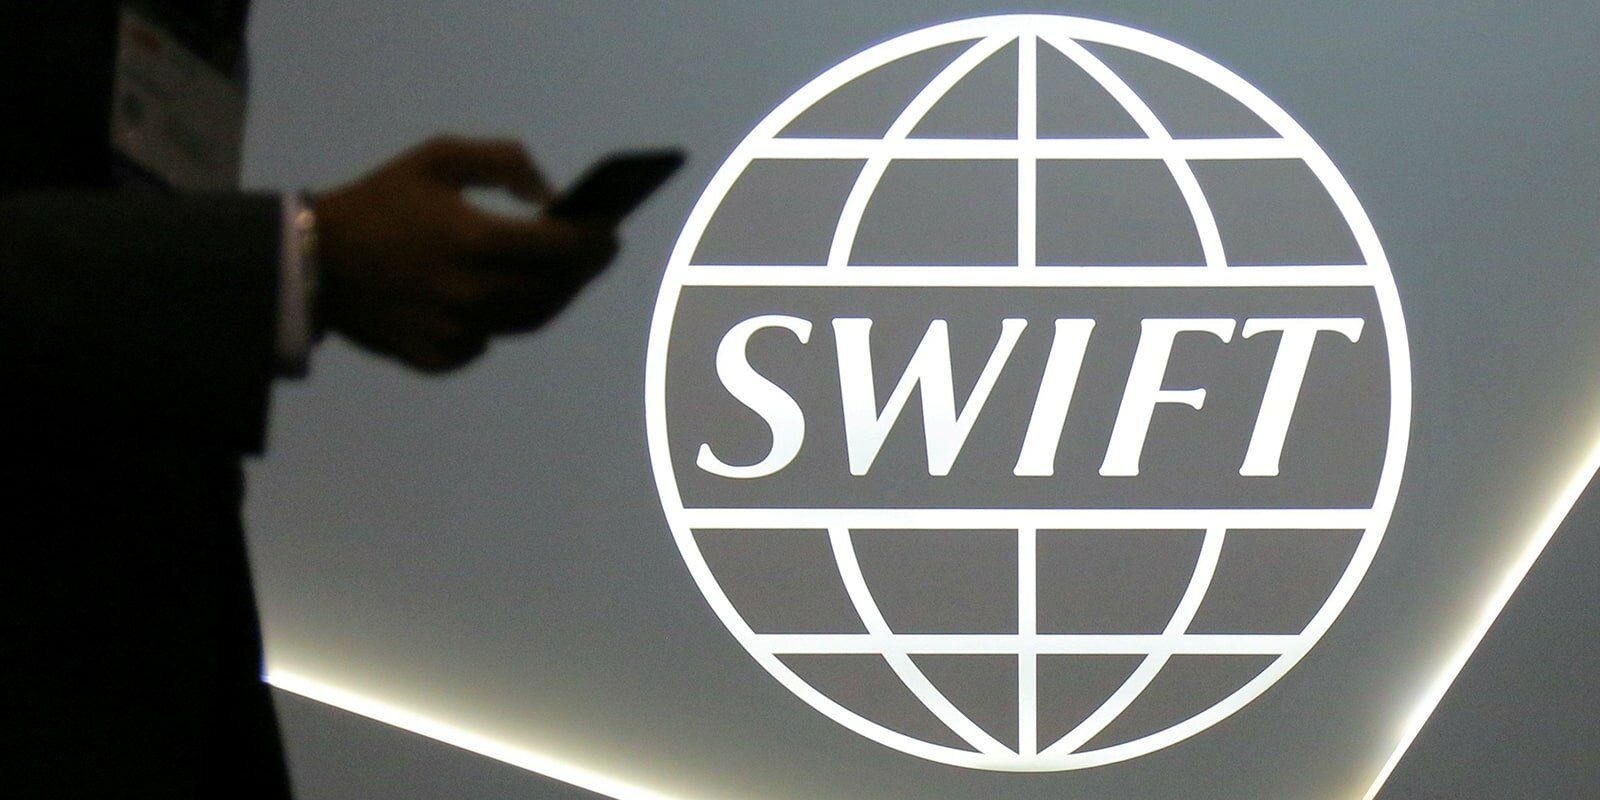 В ЕС раскрыли условие отключения России от SWIFT